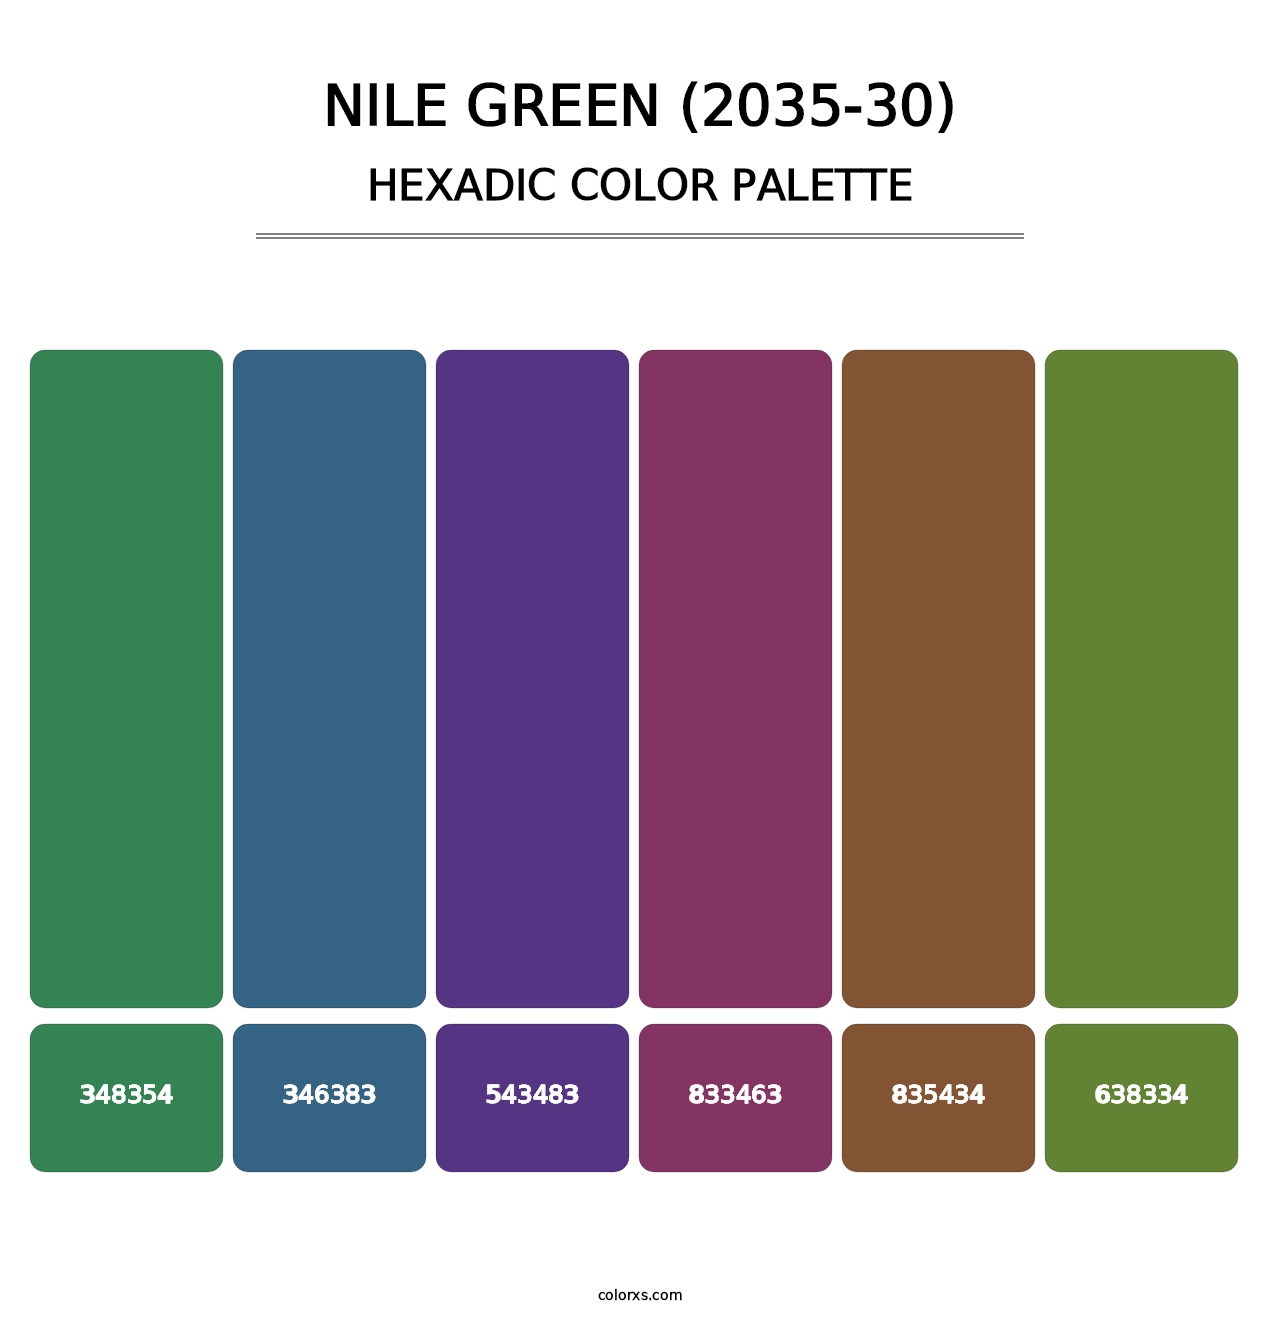 Nile Green (2035-30) - Hexadic Color Palette